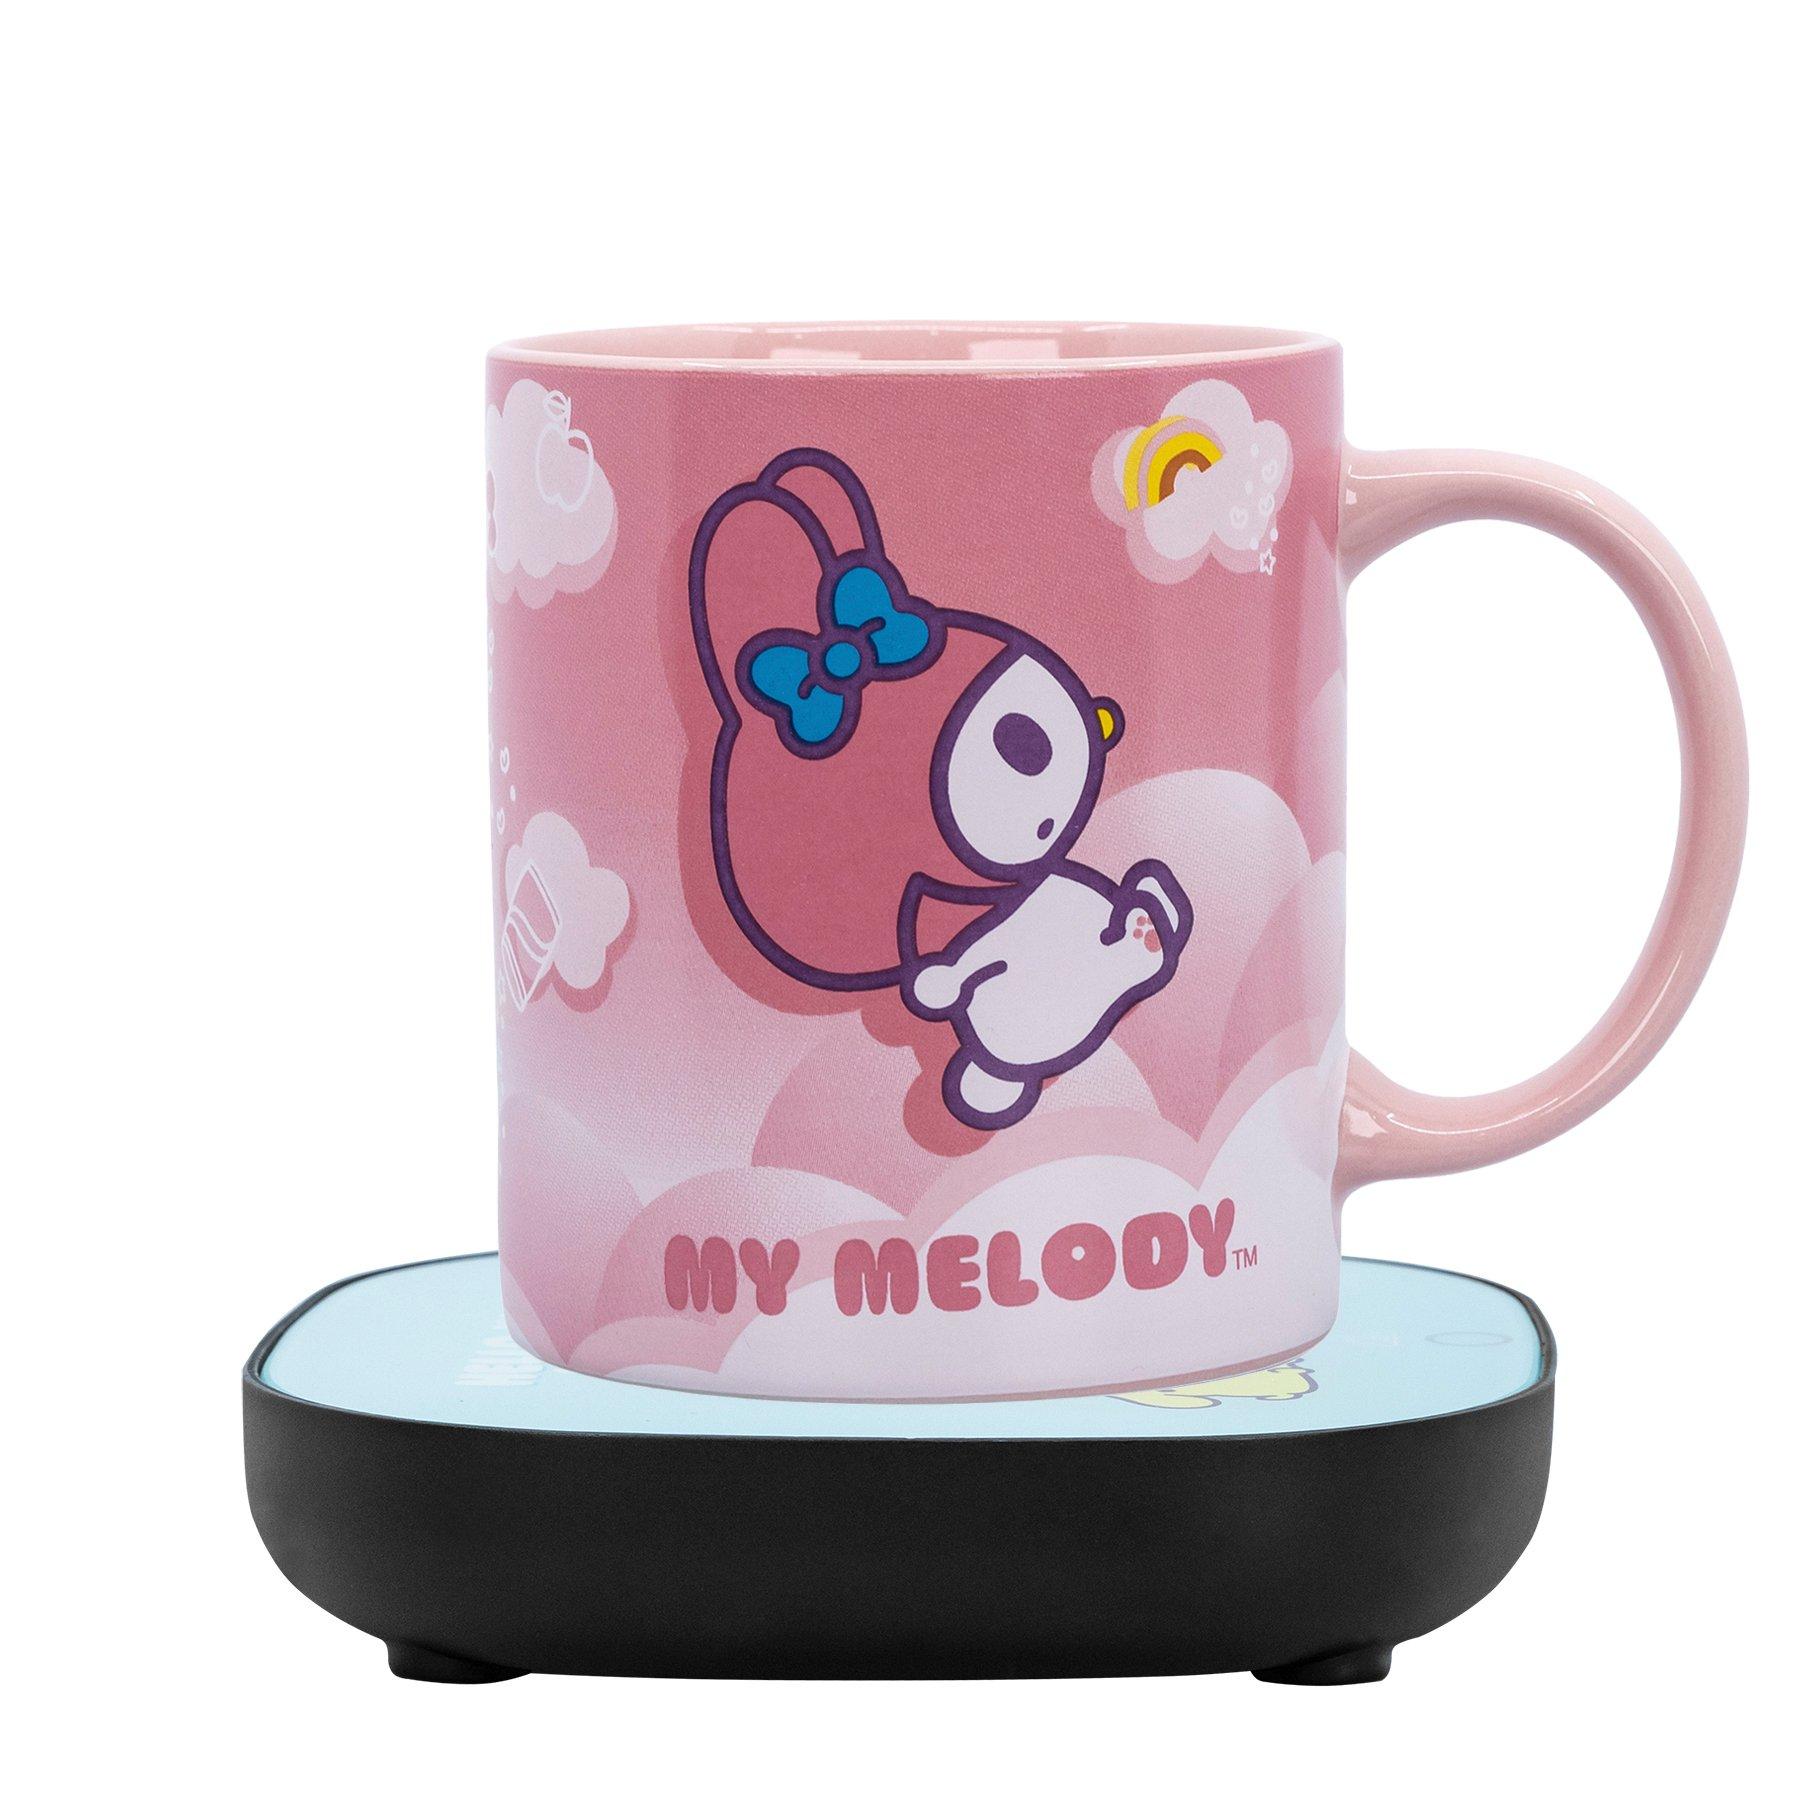 Hello Kitty (Sanrio) Single Cup Coffee Maker with Mugs